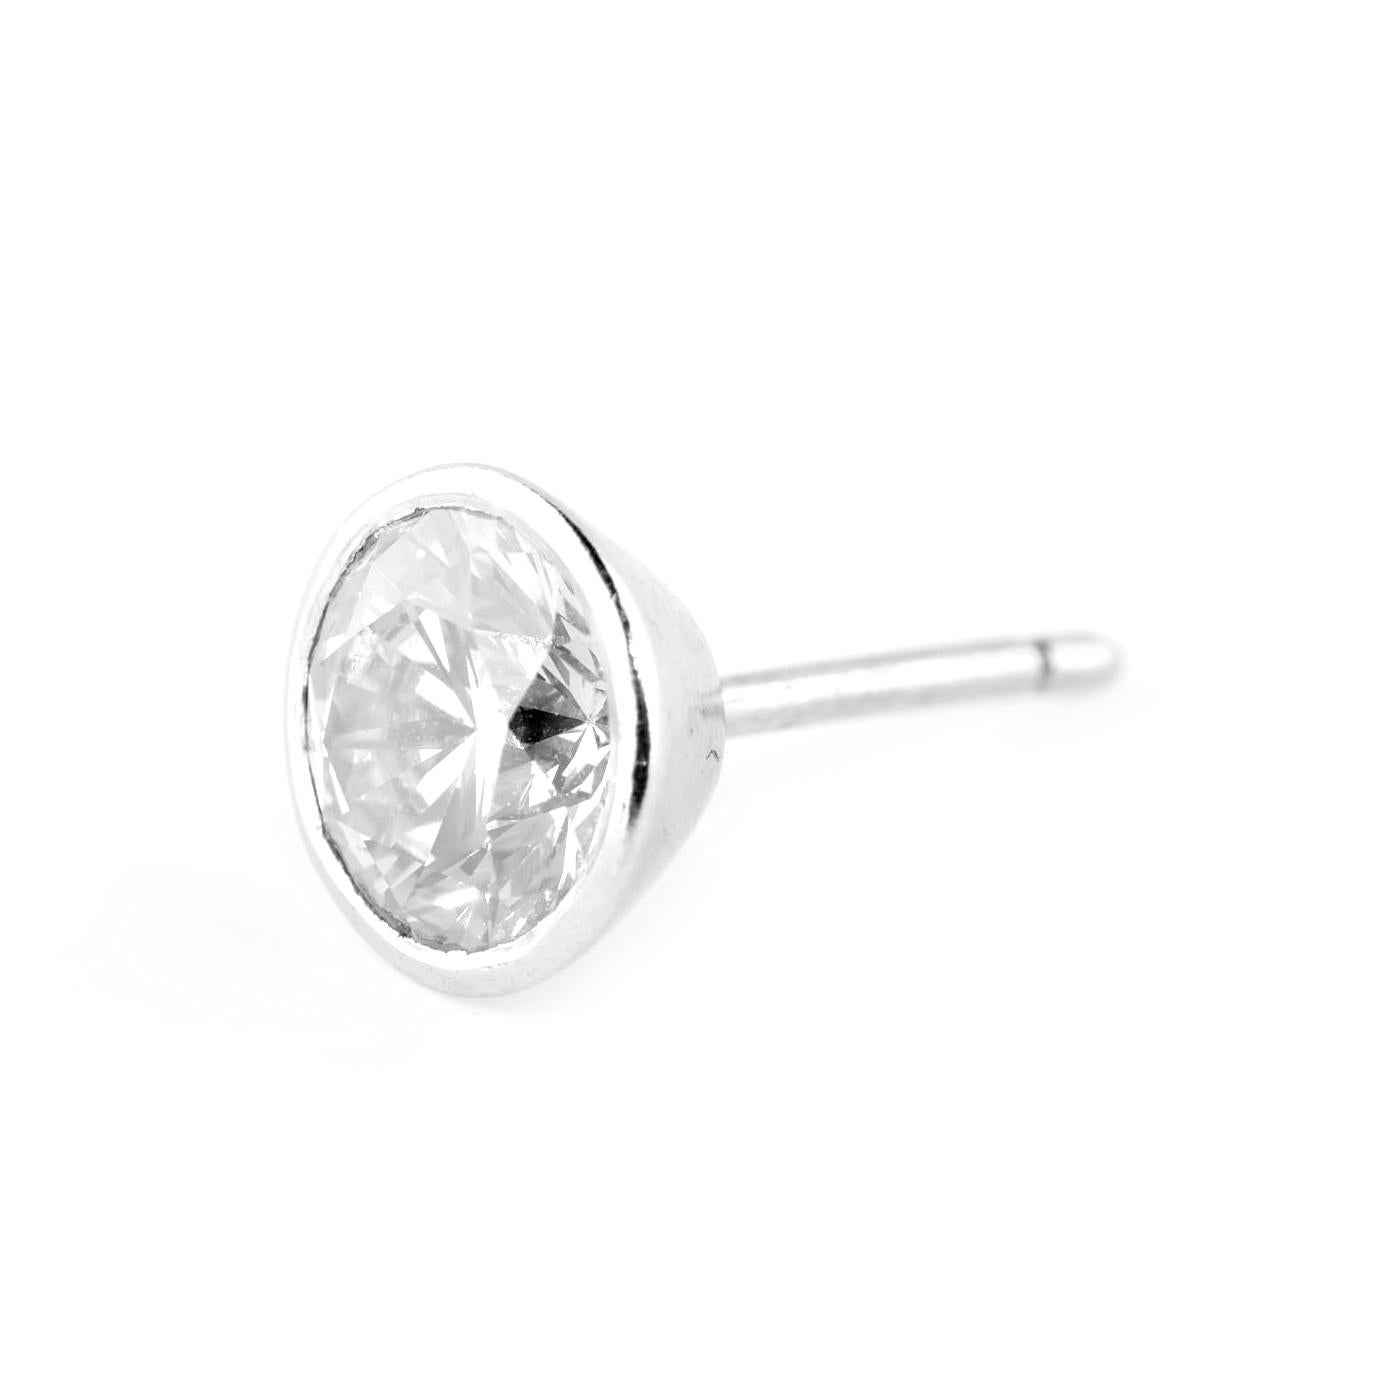 2.5 carat diamond earrings price